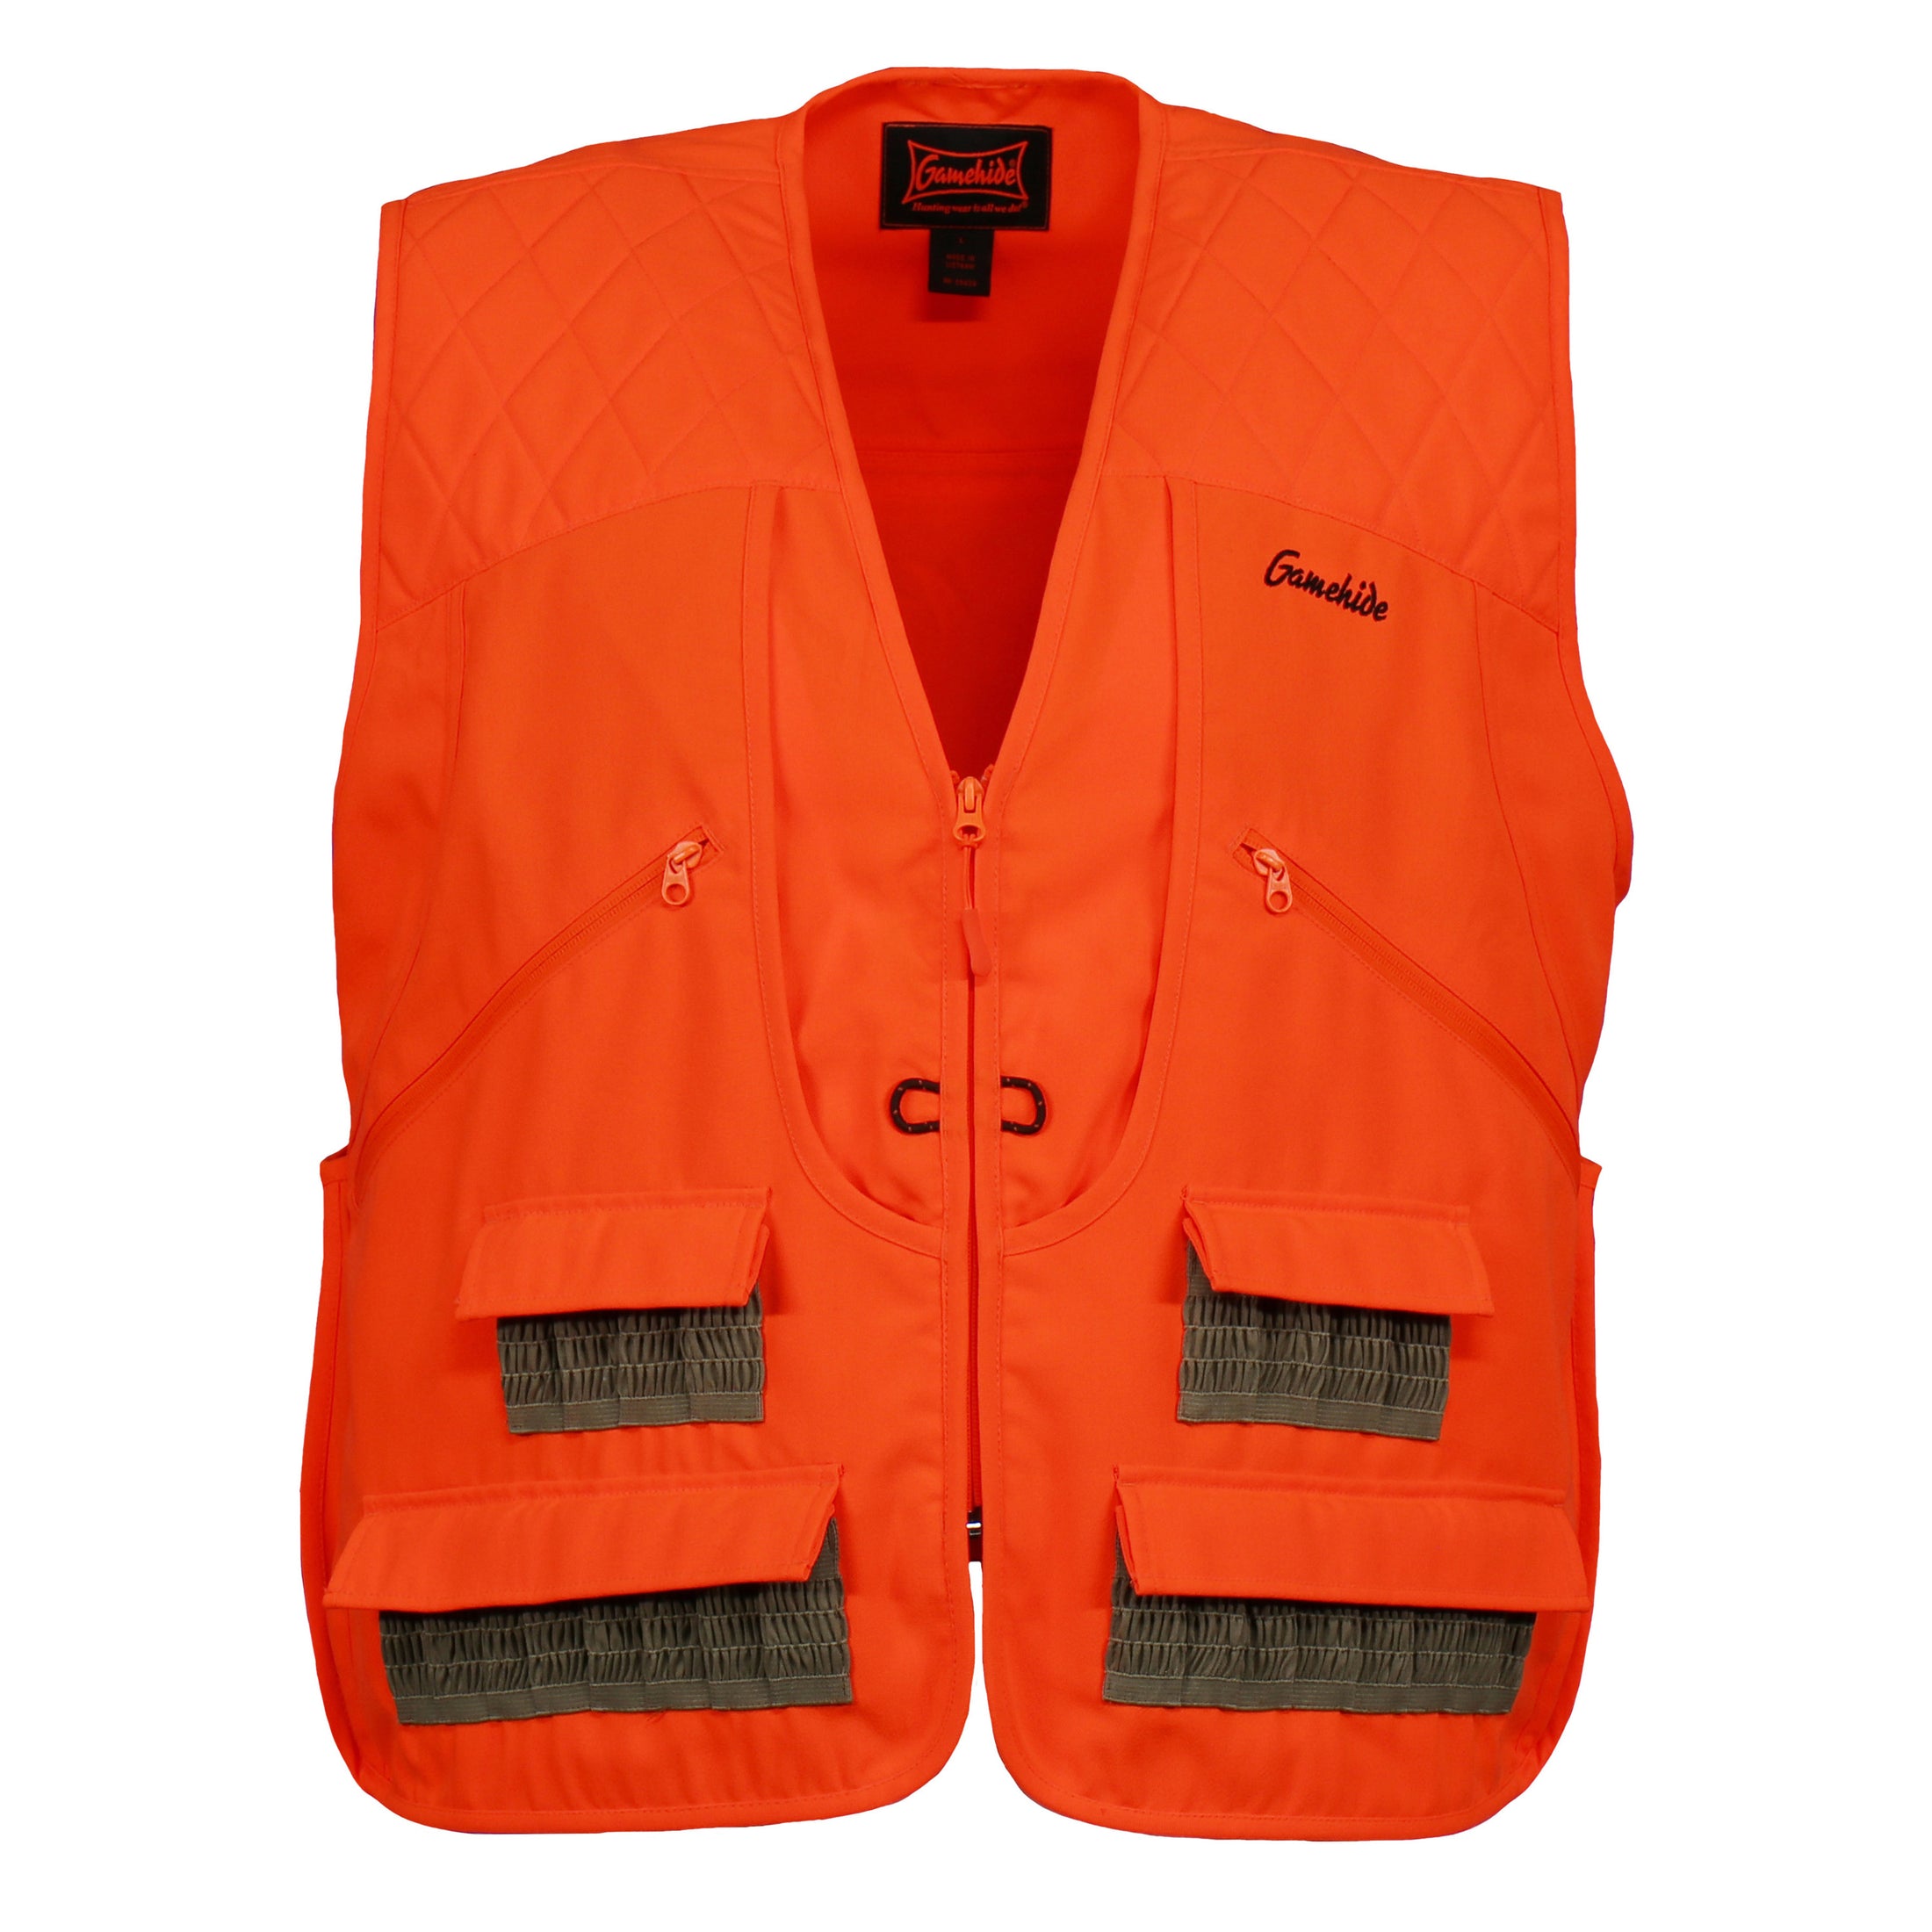 gamehide Pheasant Vest front (blaze orange)